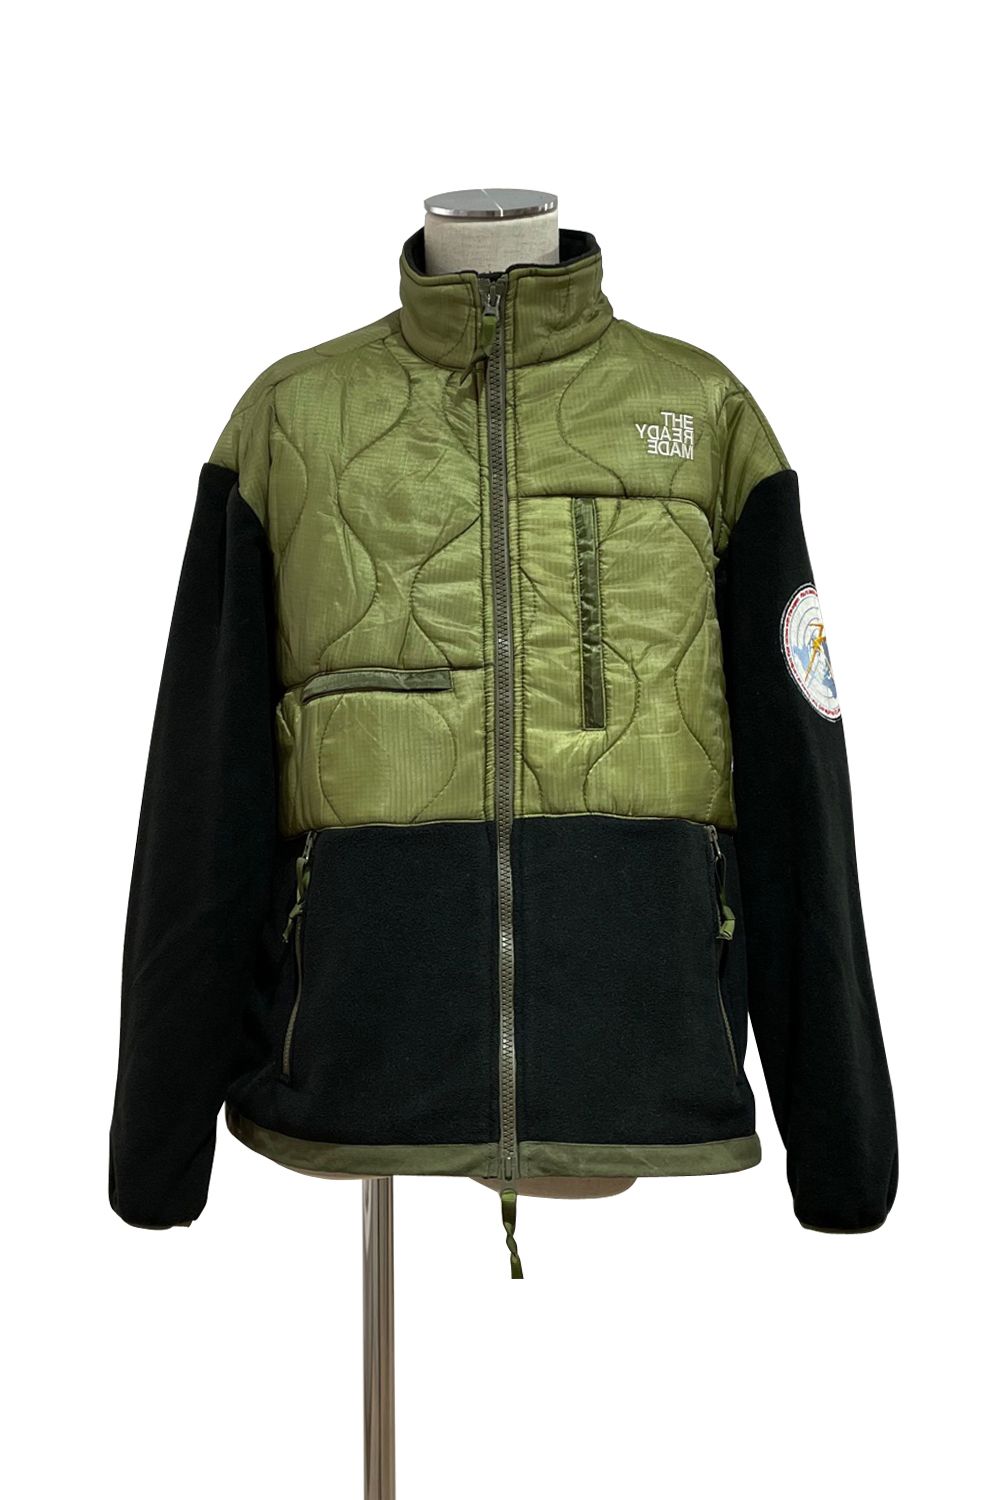 READYMADE fleece jacket フリースジャケット | organicway.co.th